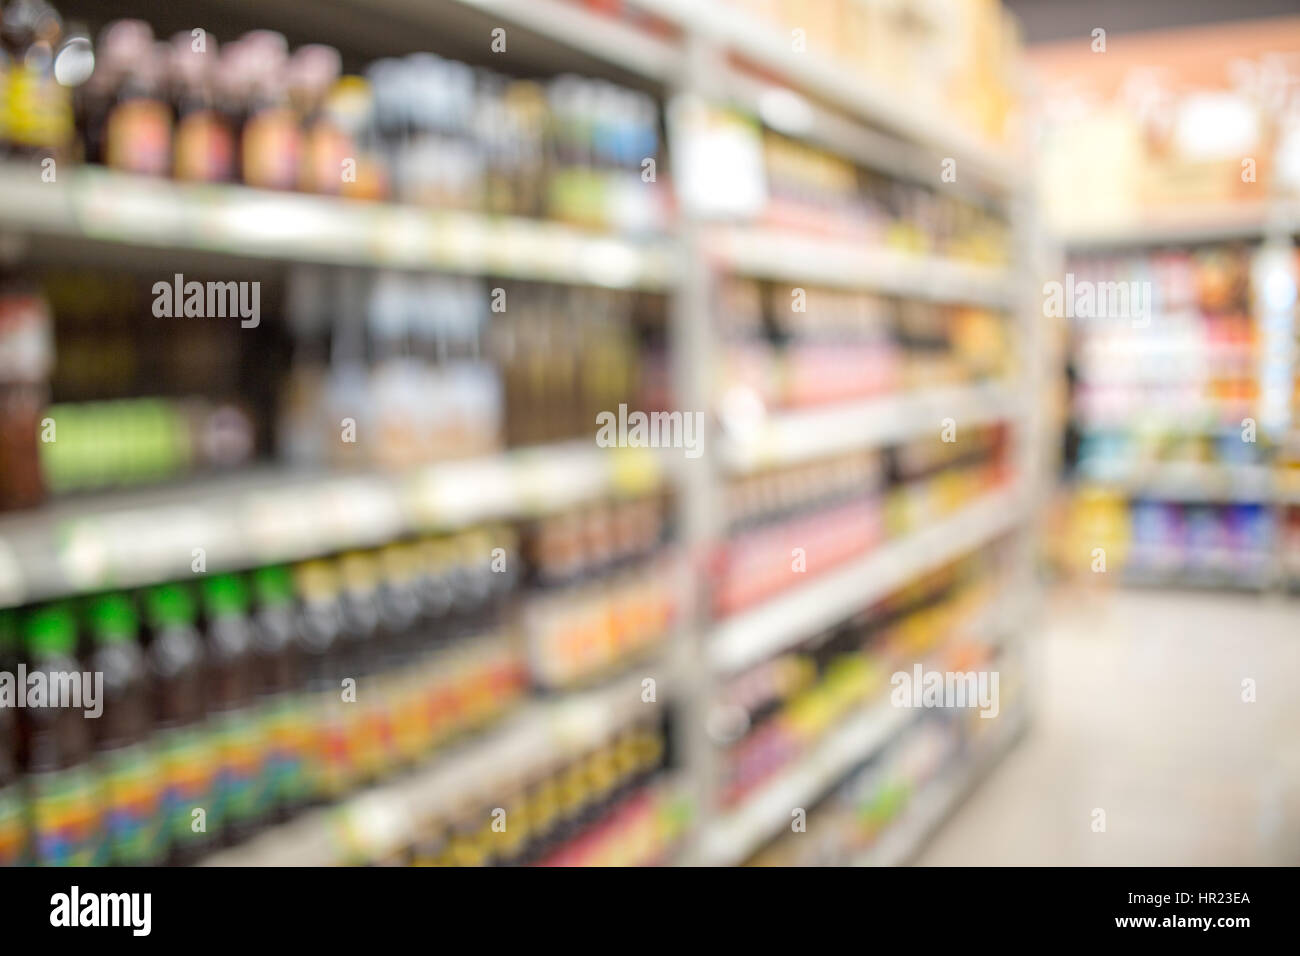 defocused of shelf in supermarket Stock Photo